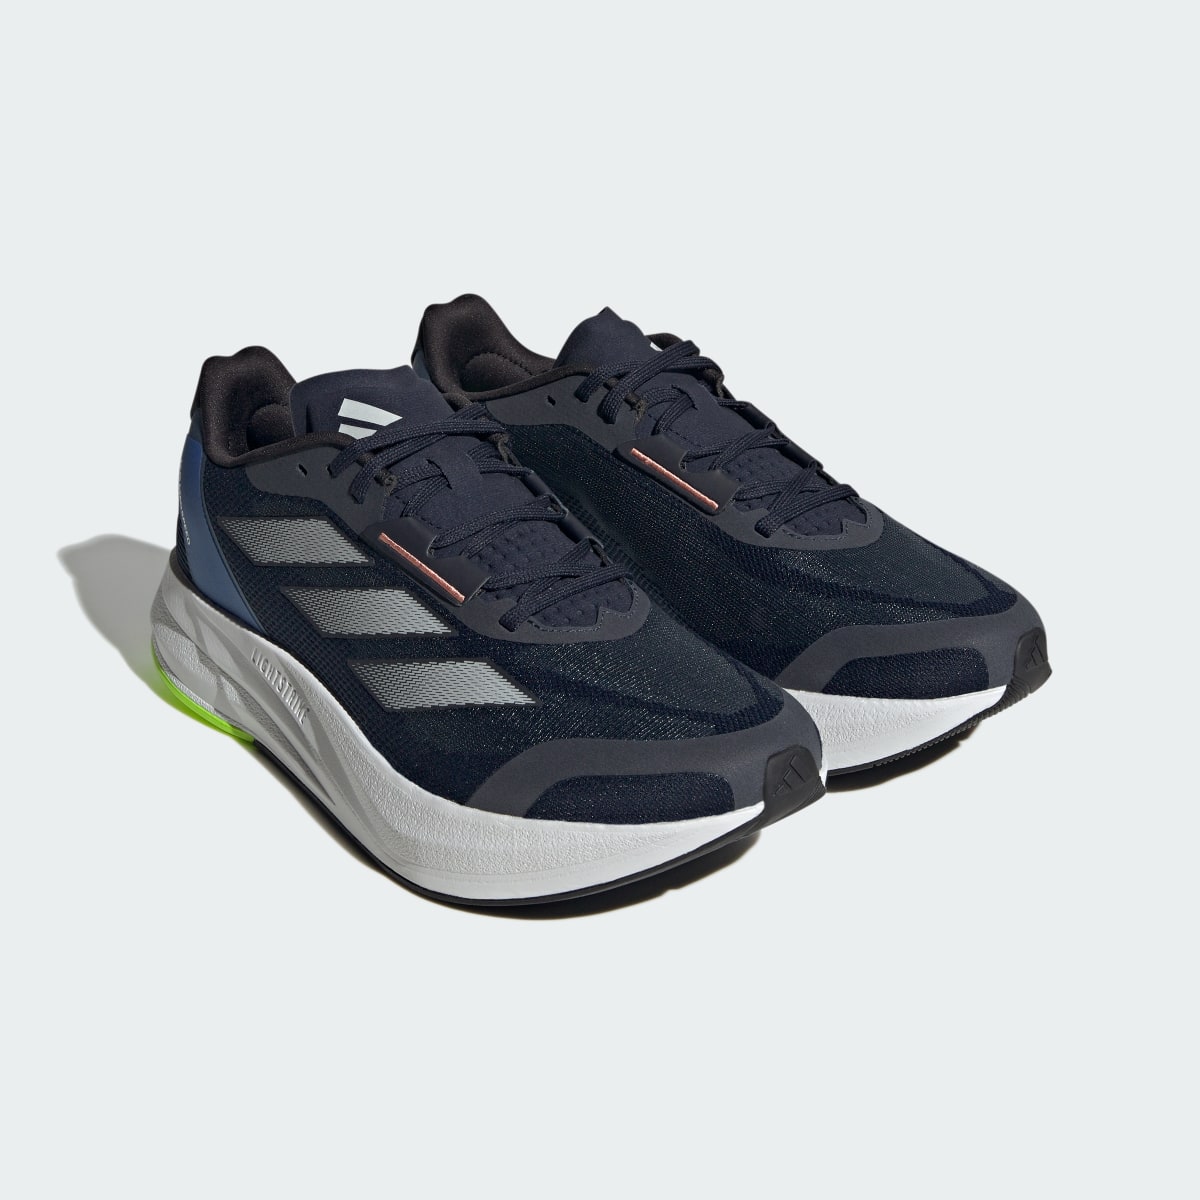 Adidas Duramo Speed Shoes. 8